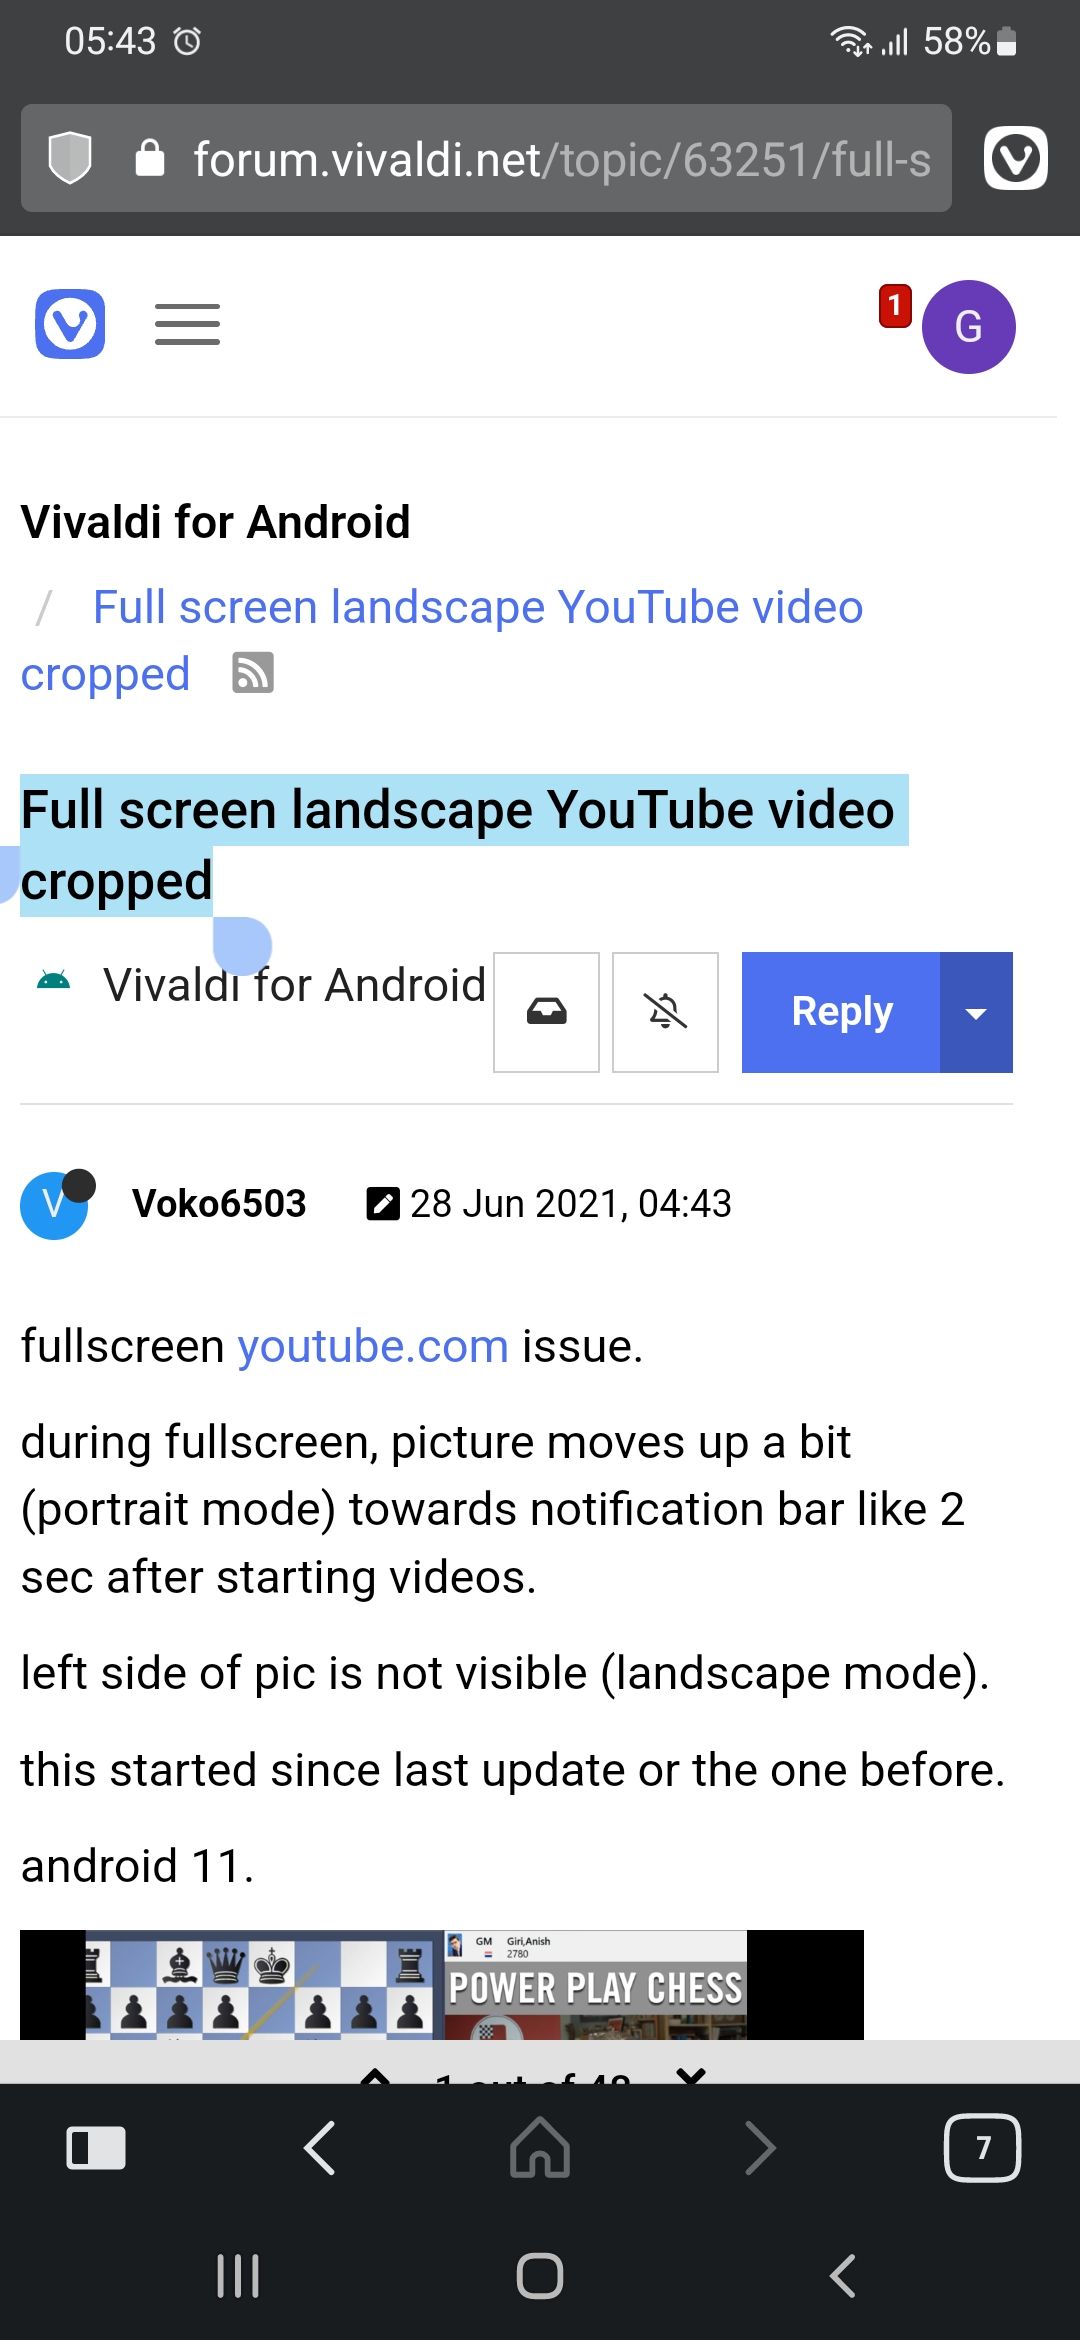 Full screen landscape YouTube video cropped (plus old bugs?) | Vivaldi Forum